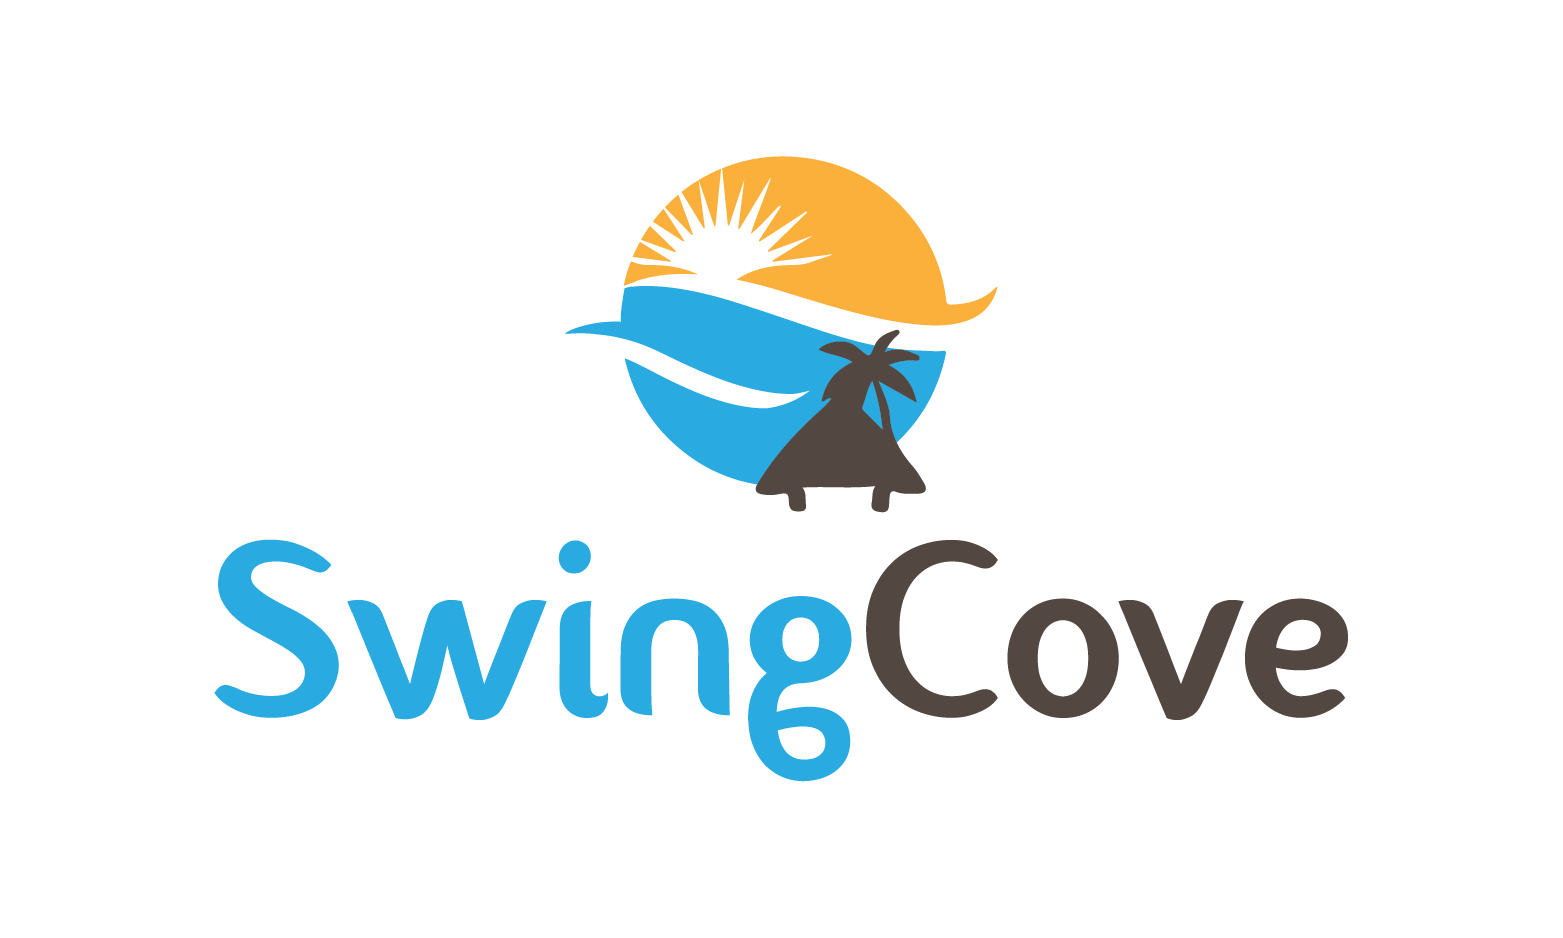 SwingCove.com - Creative brandable domain for sale